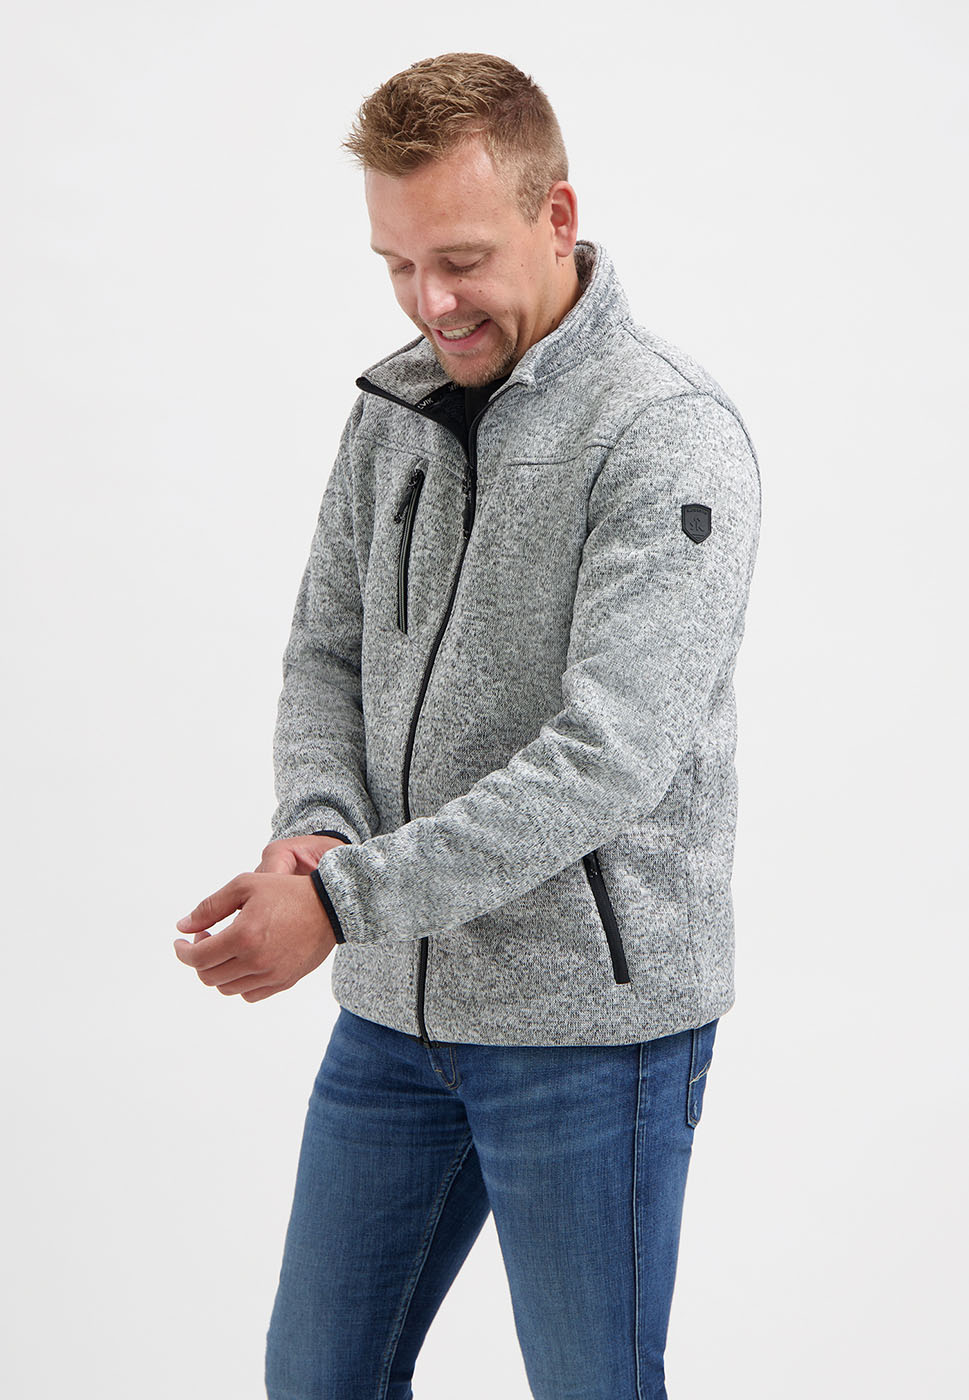 Kjelvik Scandinavian Clothing - Men Knitwear Vico Grey